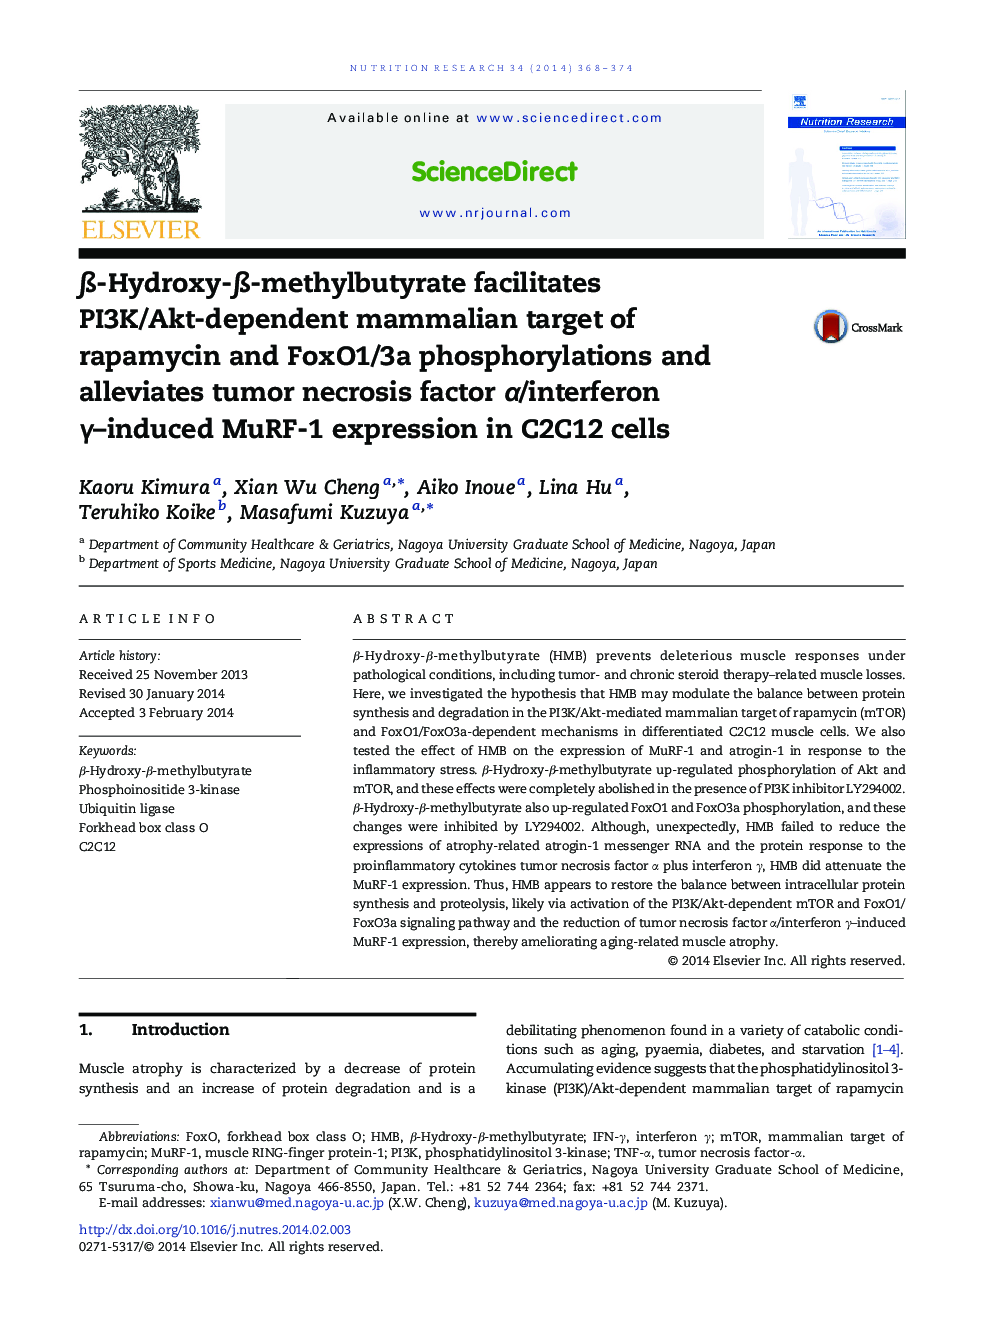 Î²-Hydroxy-Î²-methylbutyrate facilitates PI3K/Akt-dependent mammalian target of rapamycin and FoxO1/3a phosphorylations and alleviates tumor necrosis factor Î±/interferon Î³-induced MuRF-1 expression in C2C12 cells